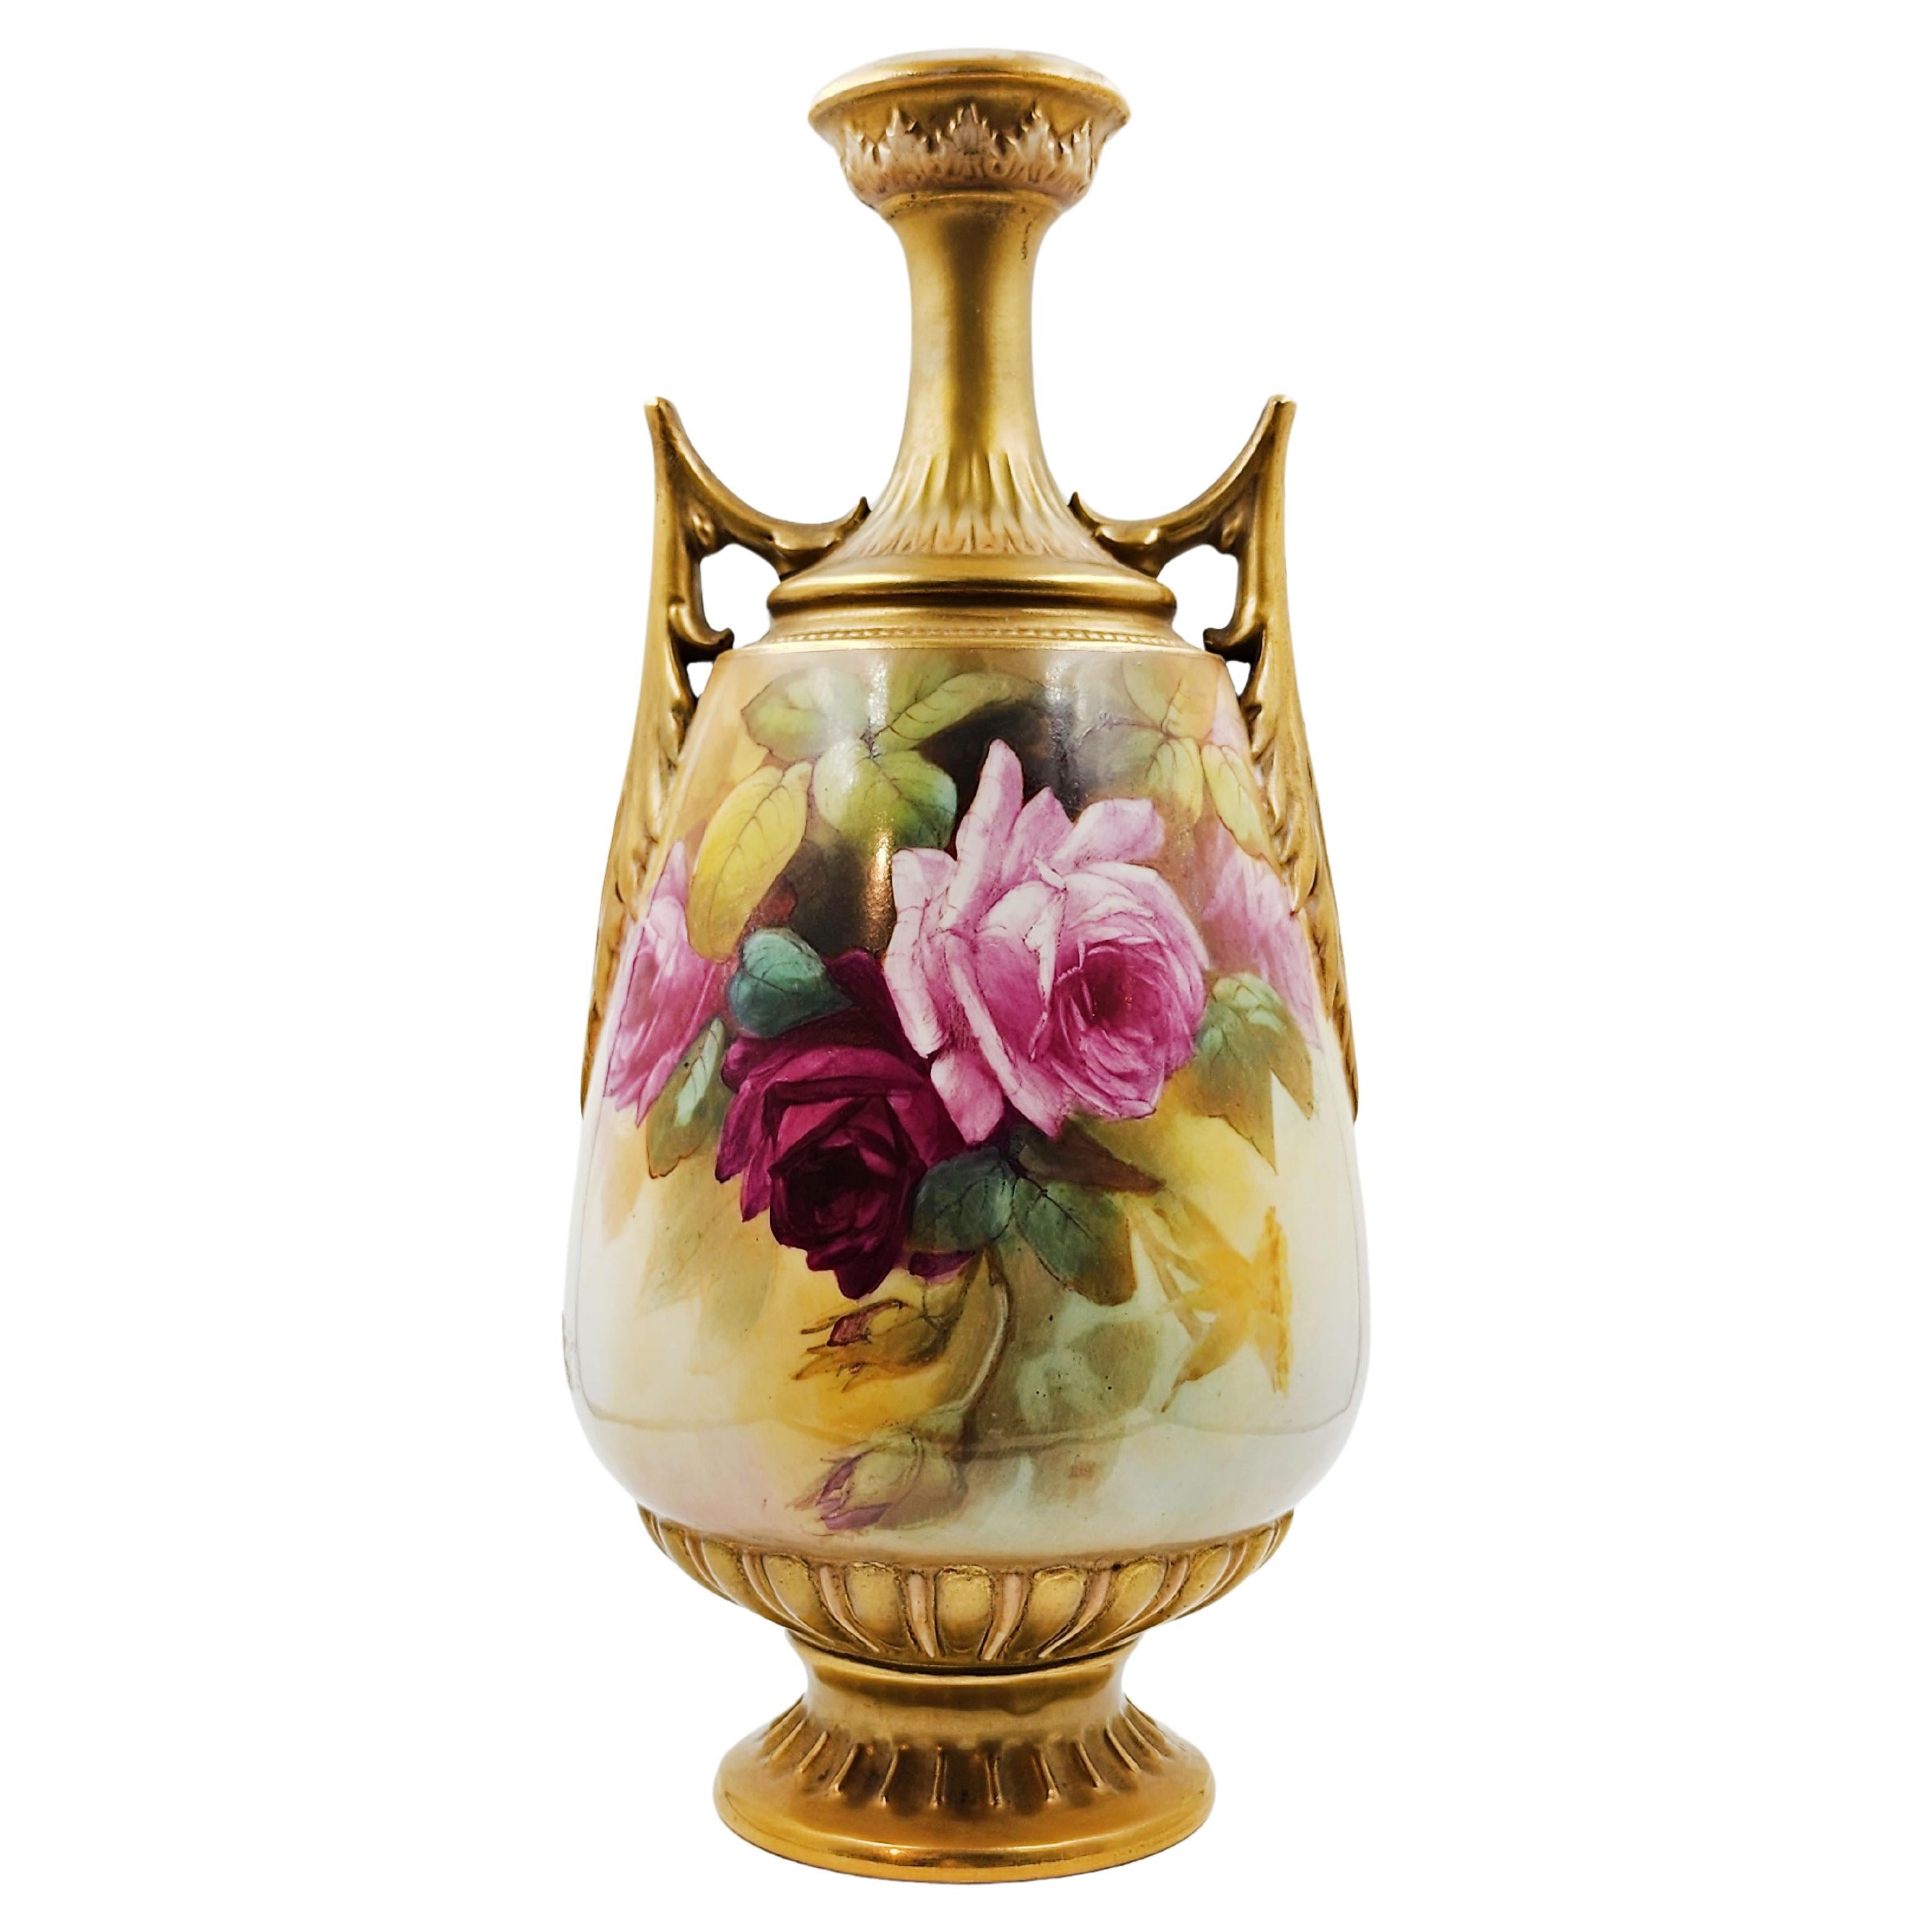 Royal Worcester Vases and Vessels